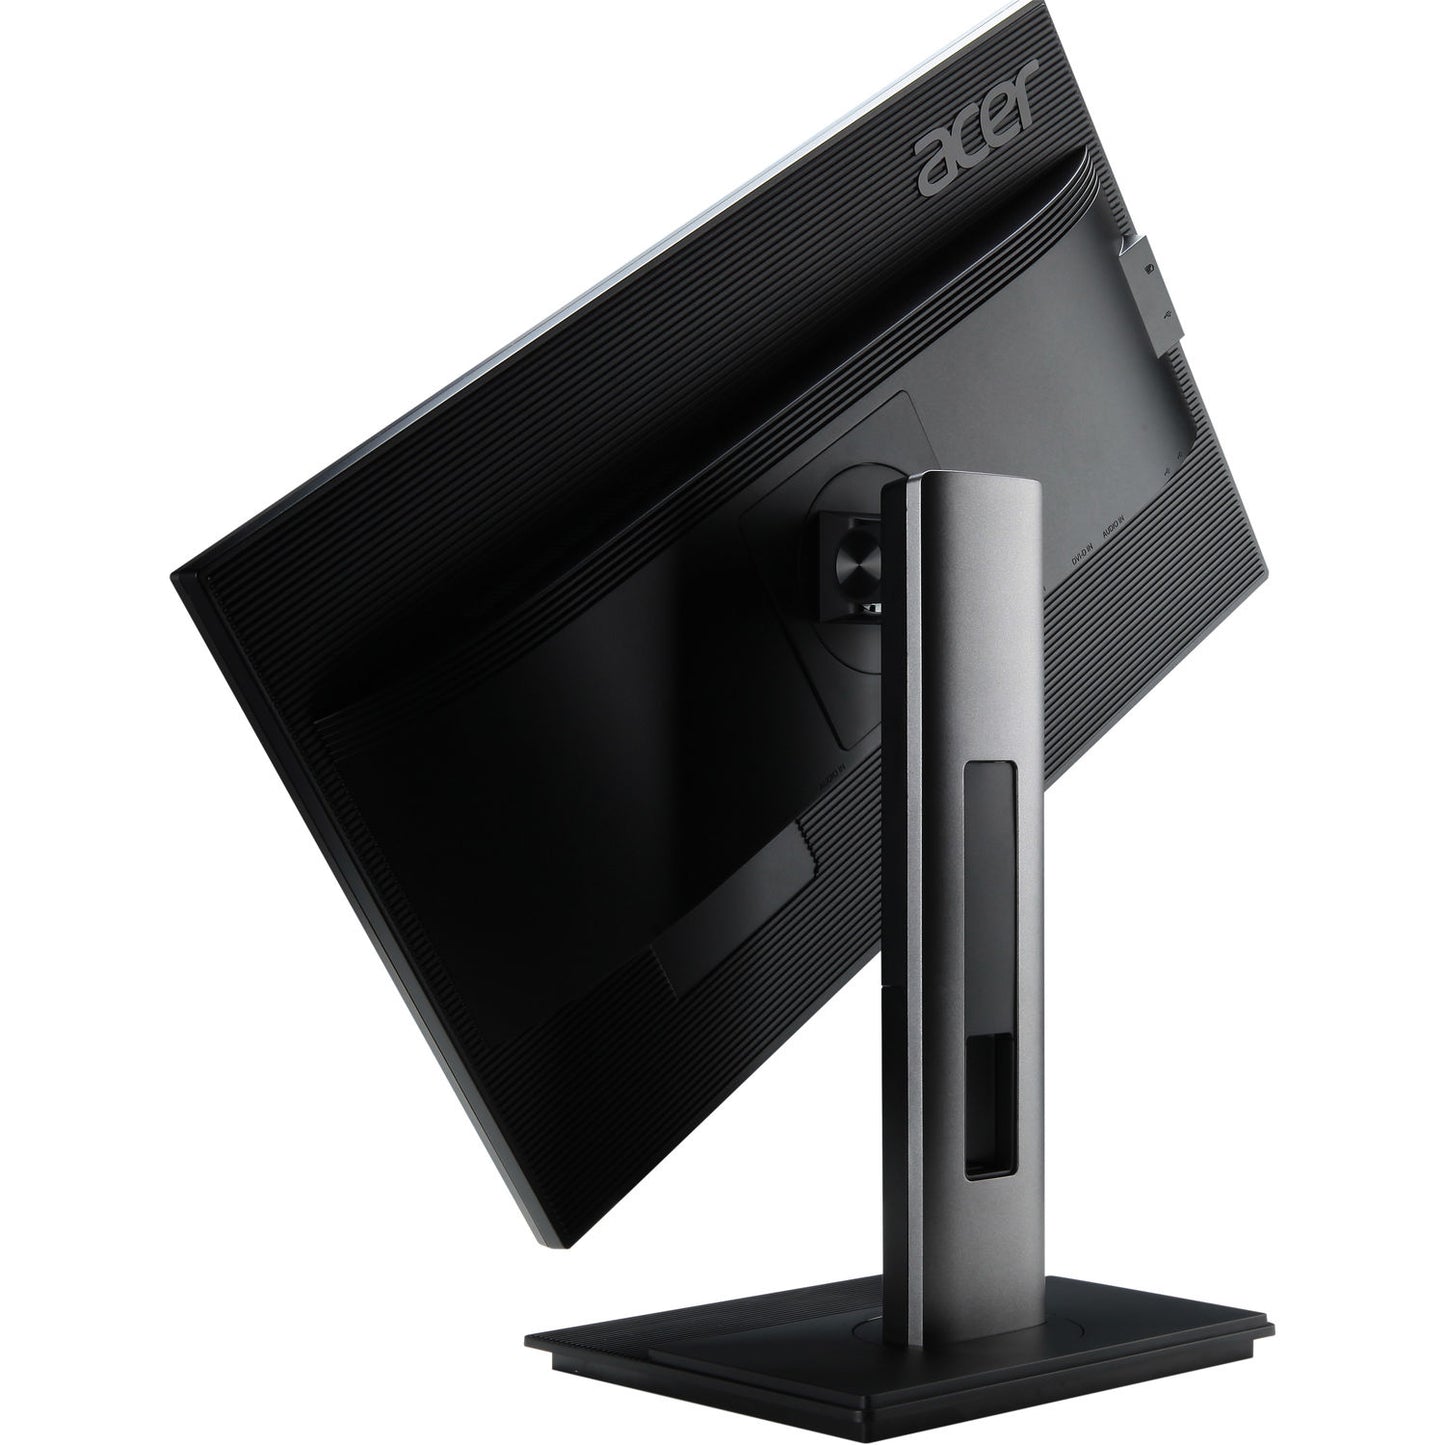 Acer B246HL ymdpr 24" FHD LED LCD Monitor - UM.FB6AA.004 New